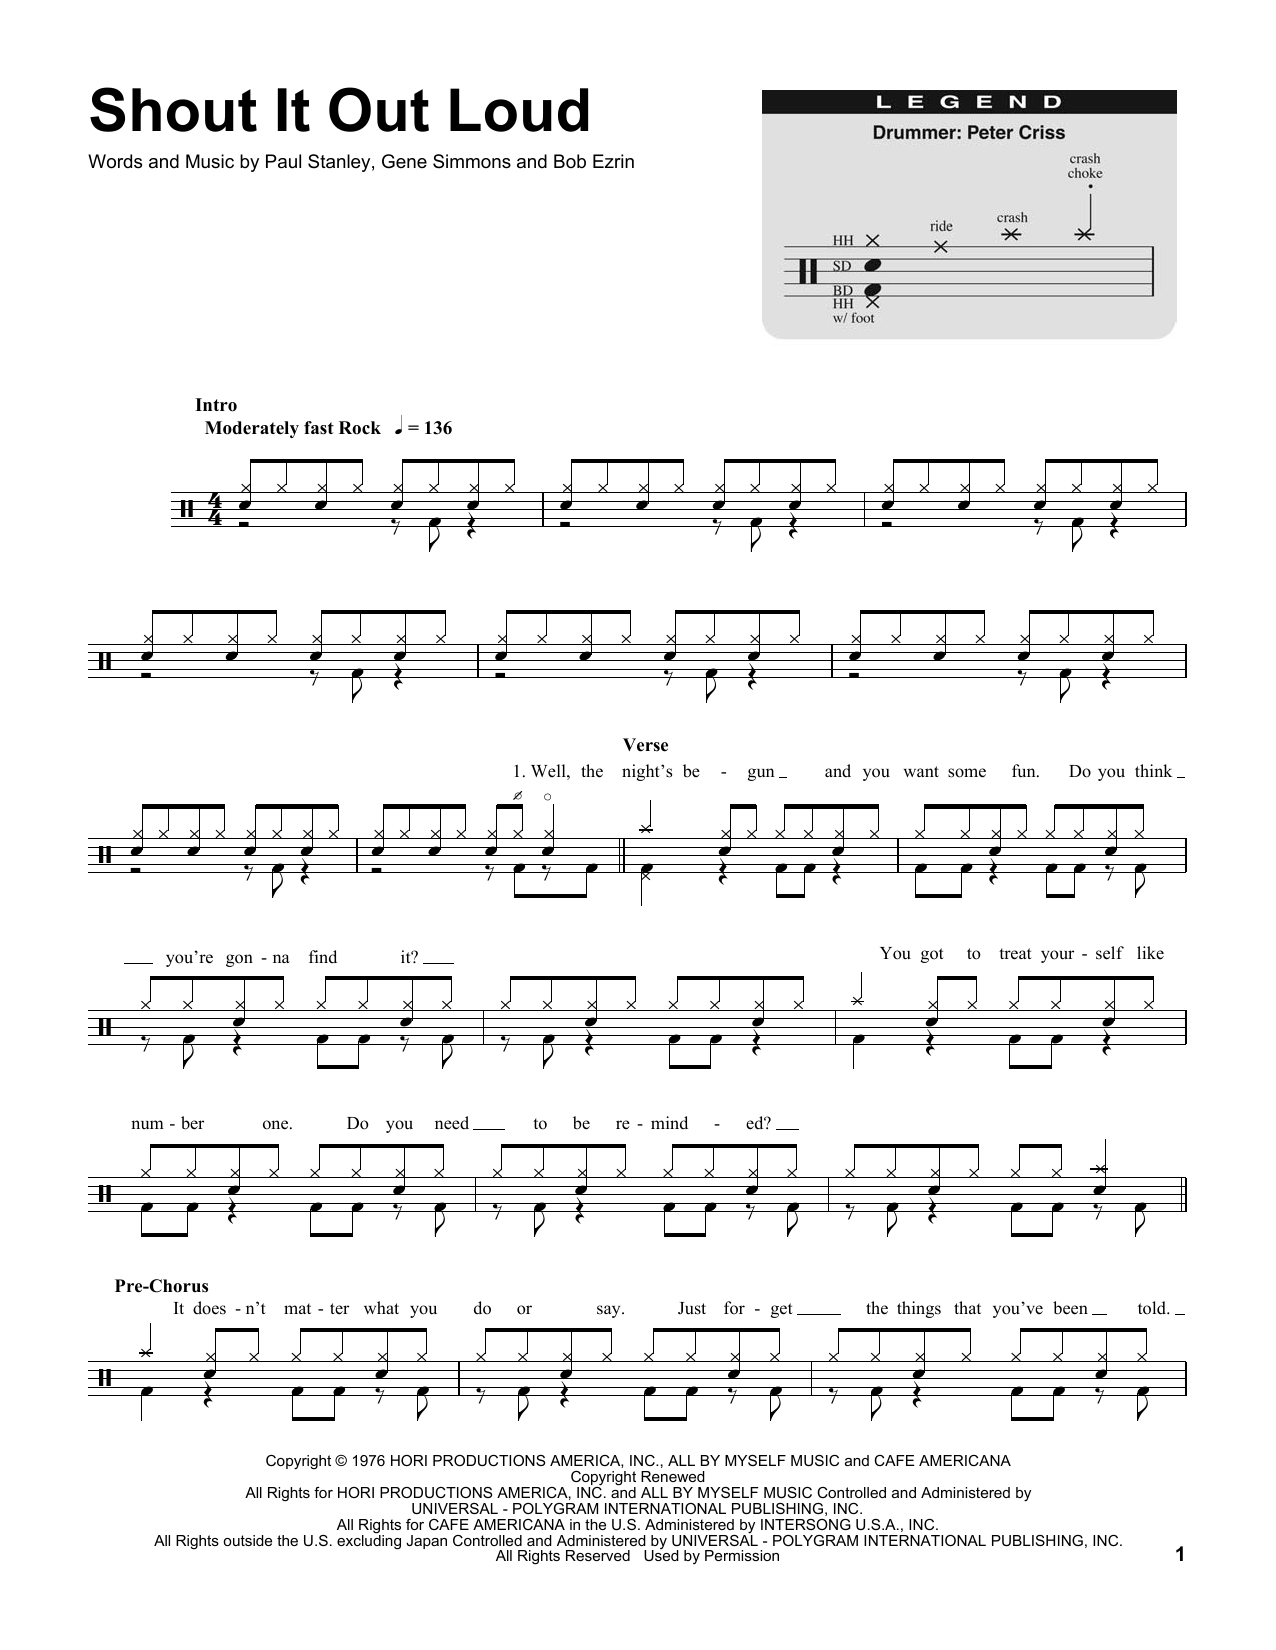 Kiss Shout It Out Loud Sheet Music Notes Chords Download Rock Notes Drums Transcription Pdf Print